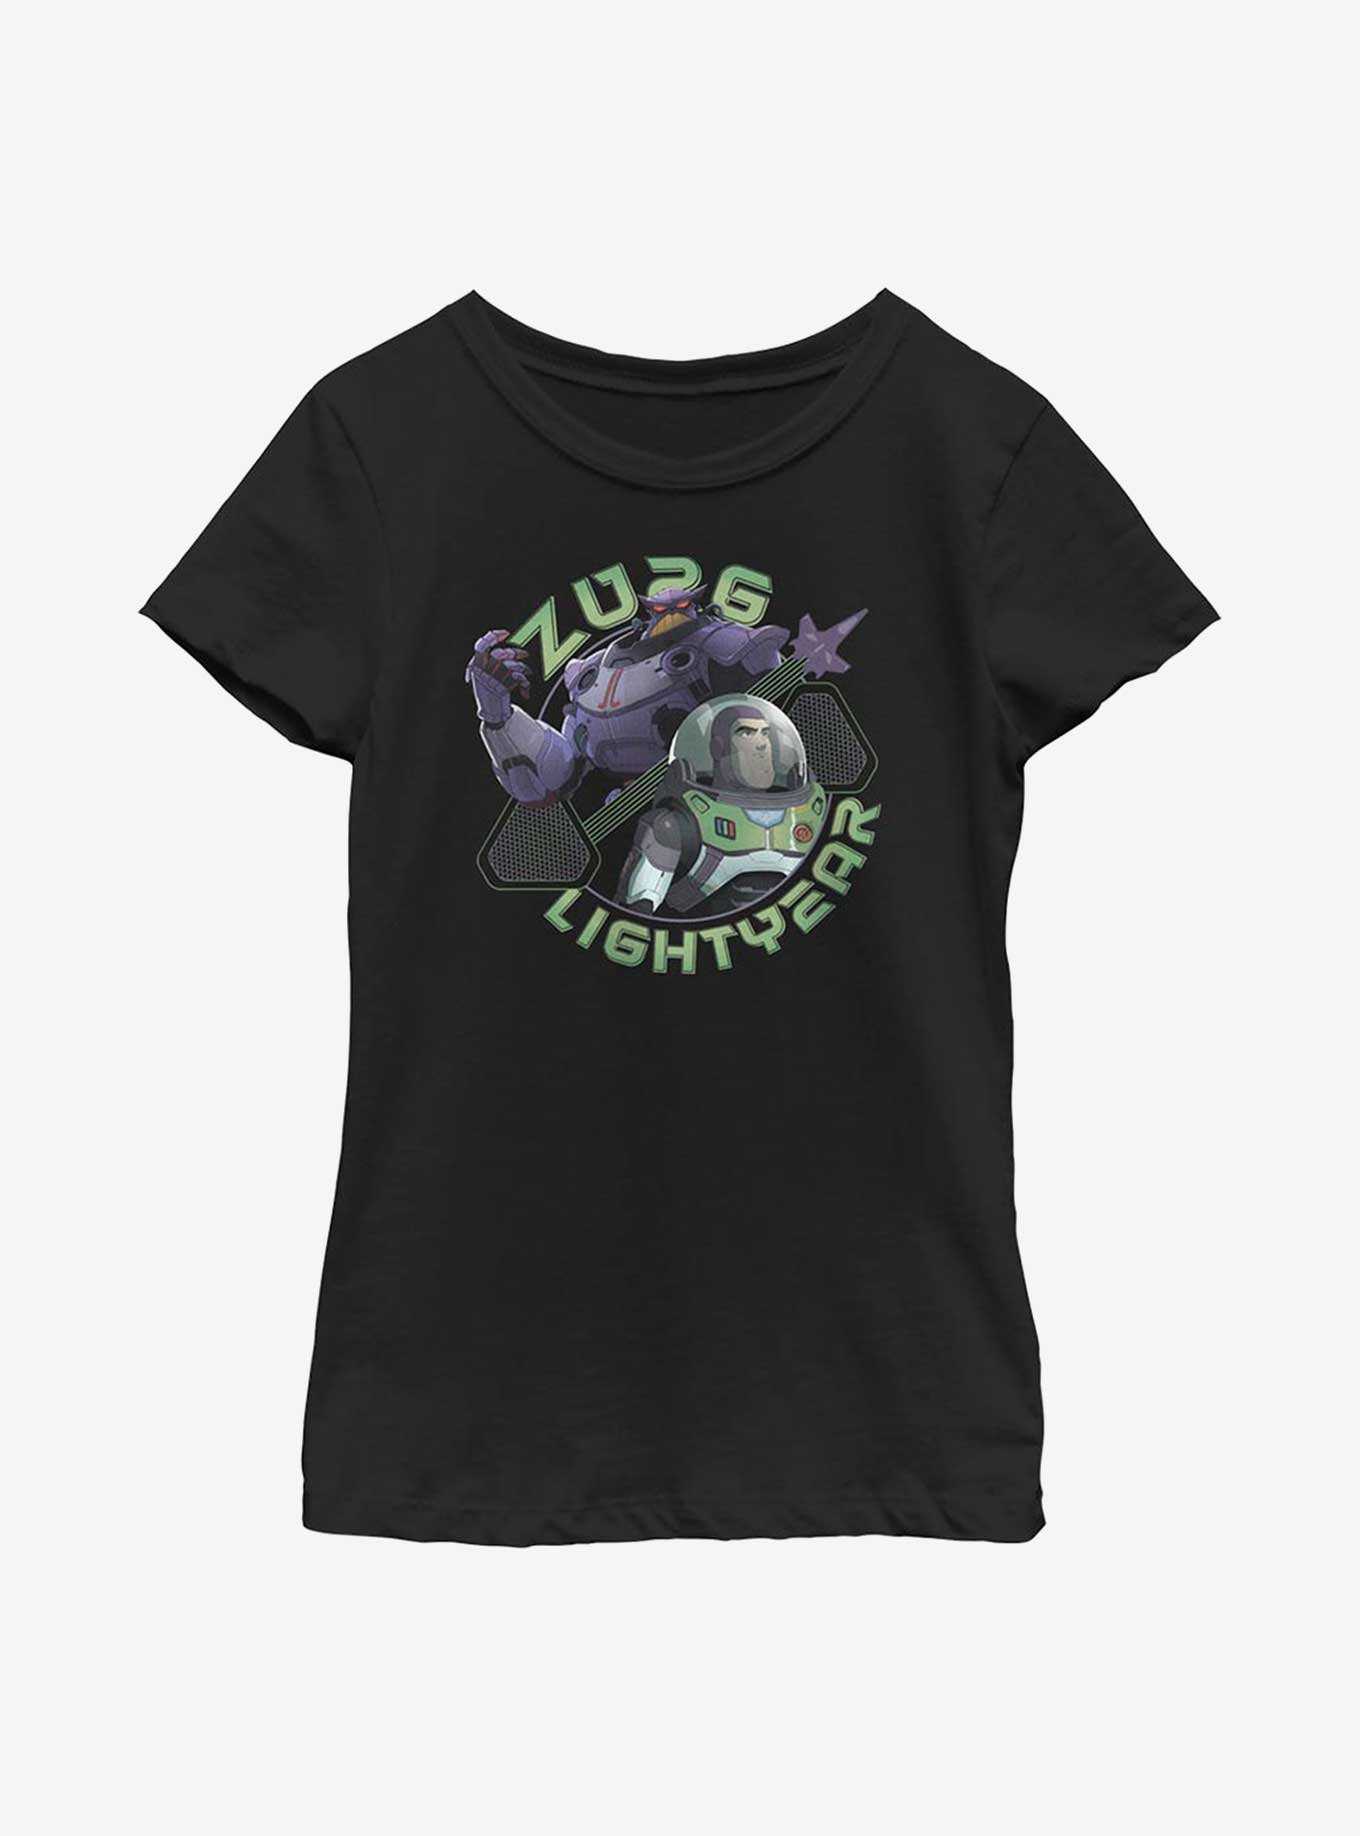 Disney Pixar Lightyear Two Sides Youth Girls T-Shirt, , hi-res